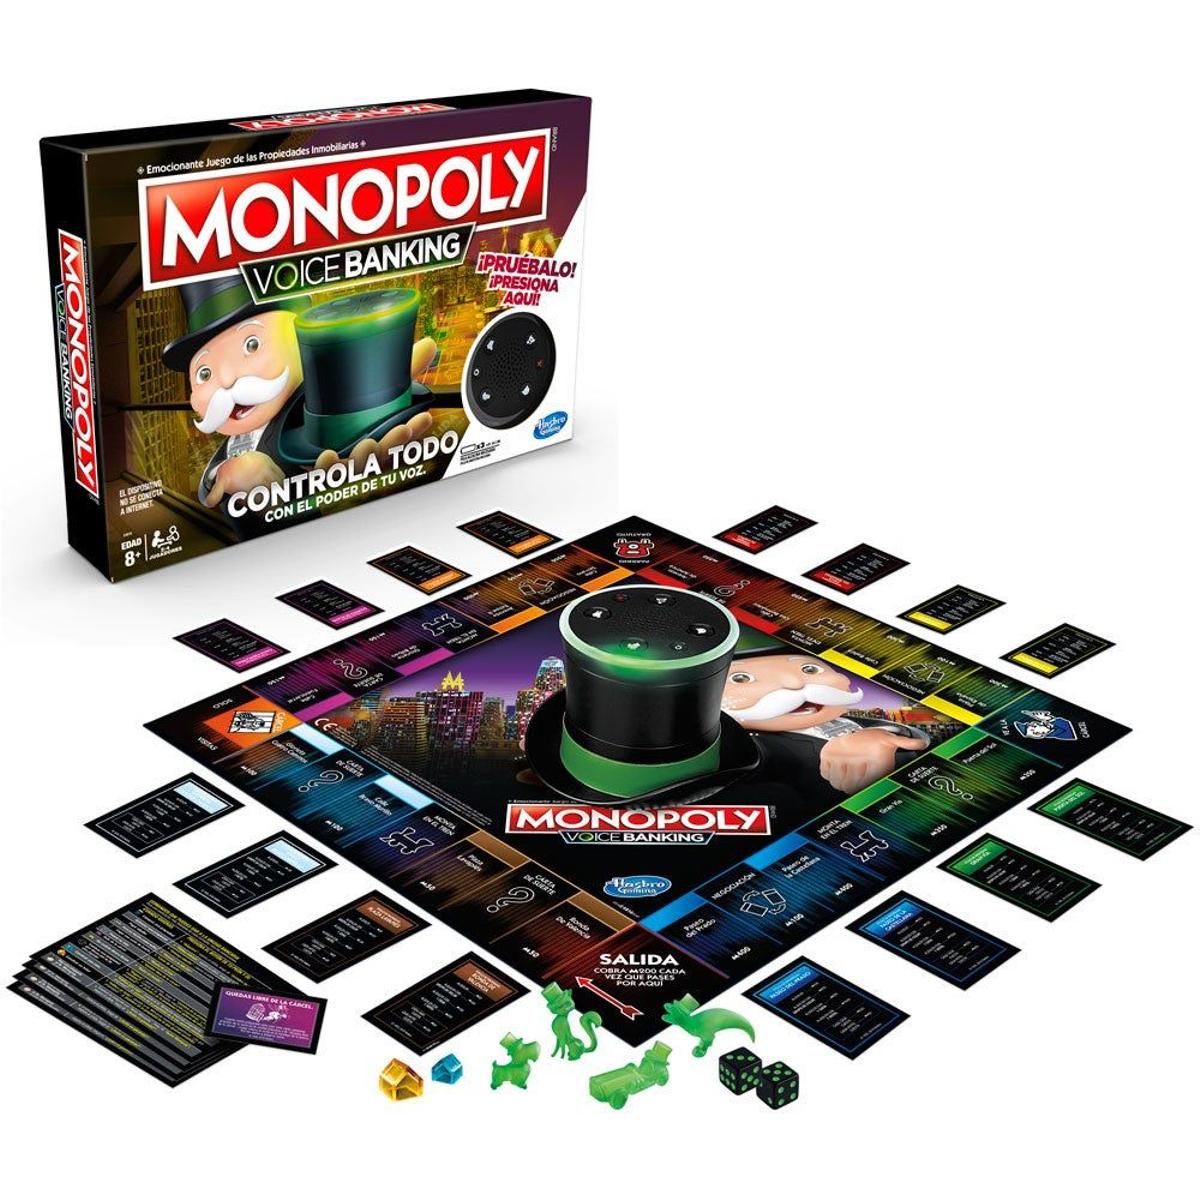 Monopoly Voice Banking, de Hasbro